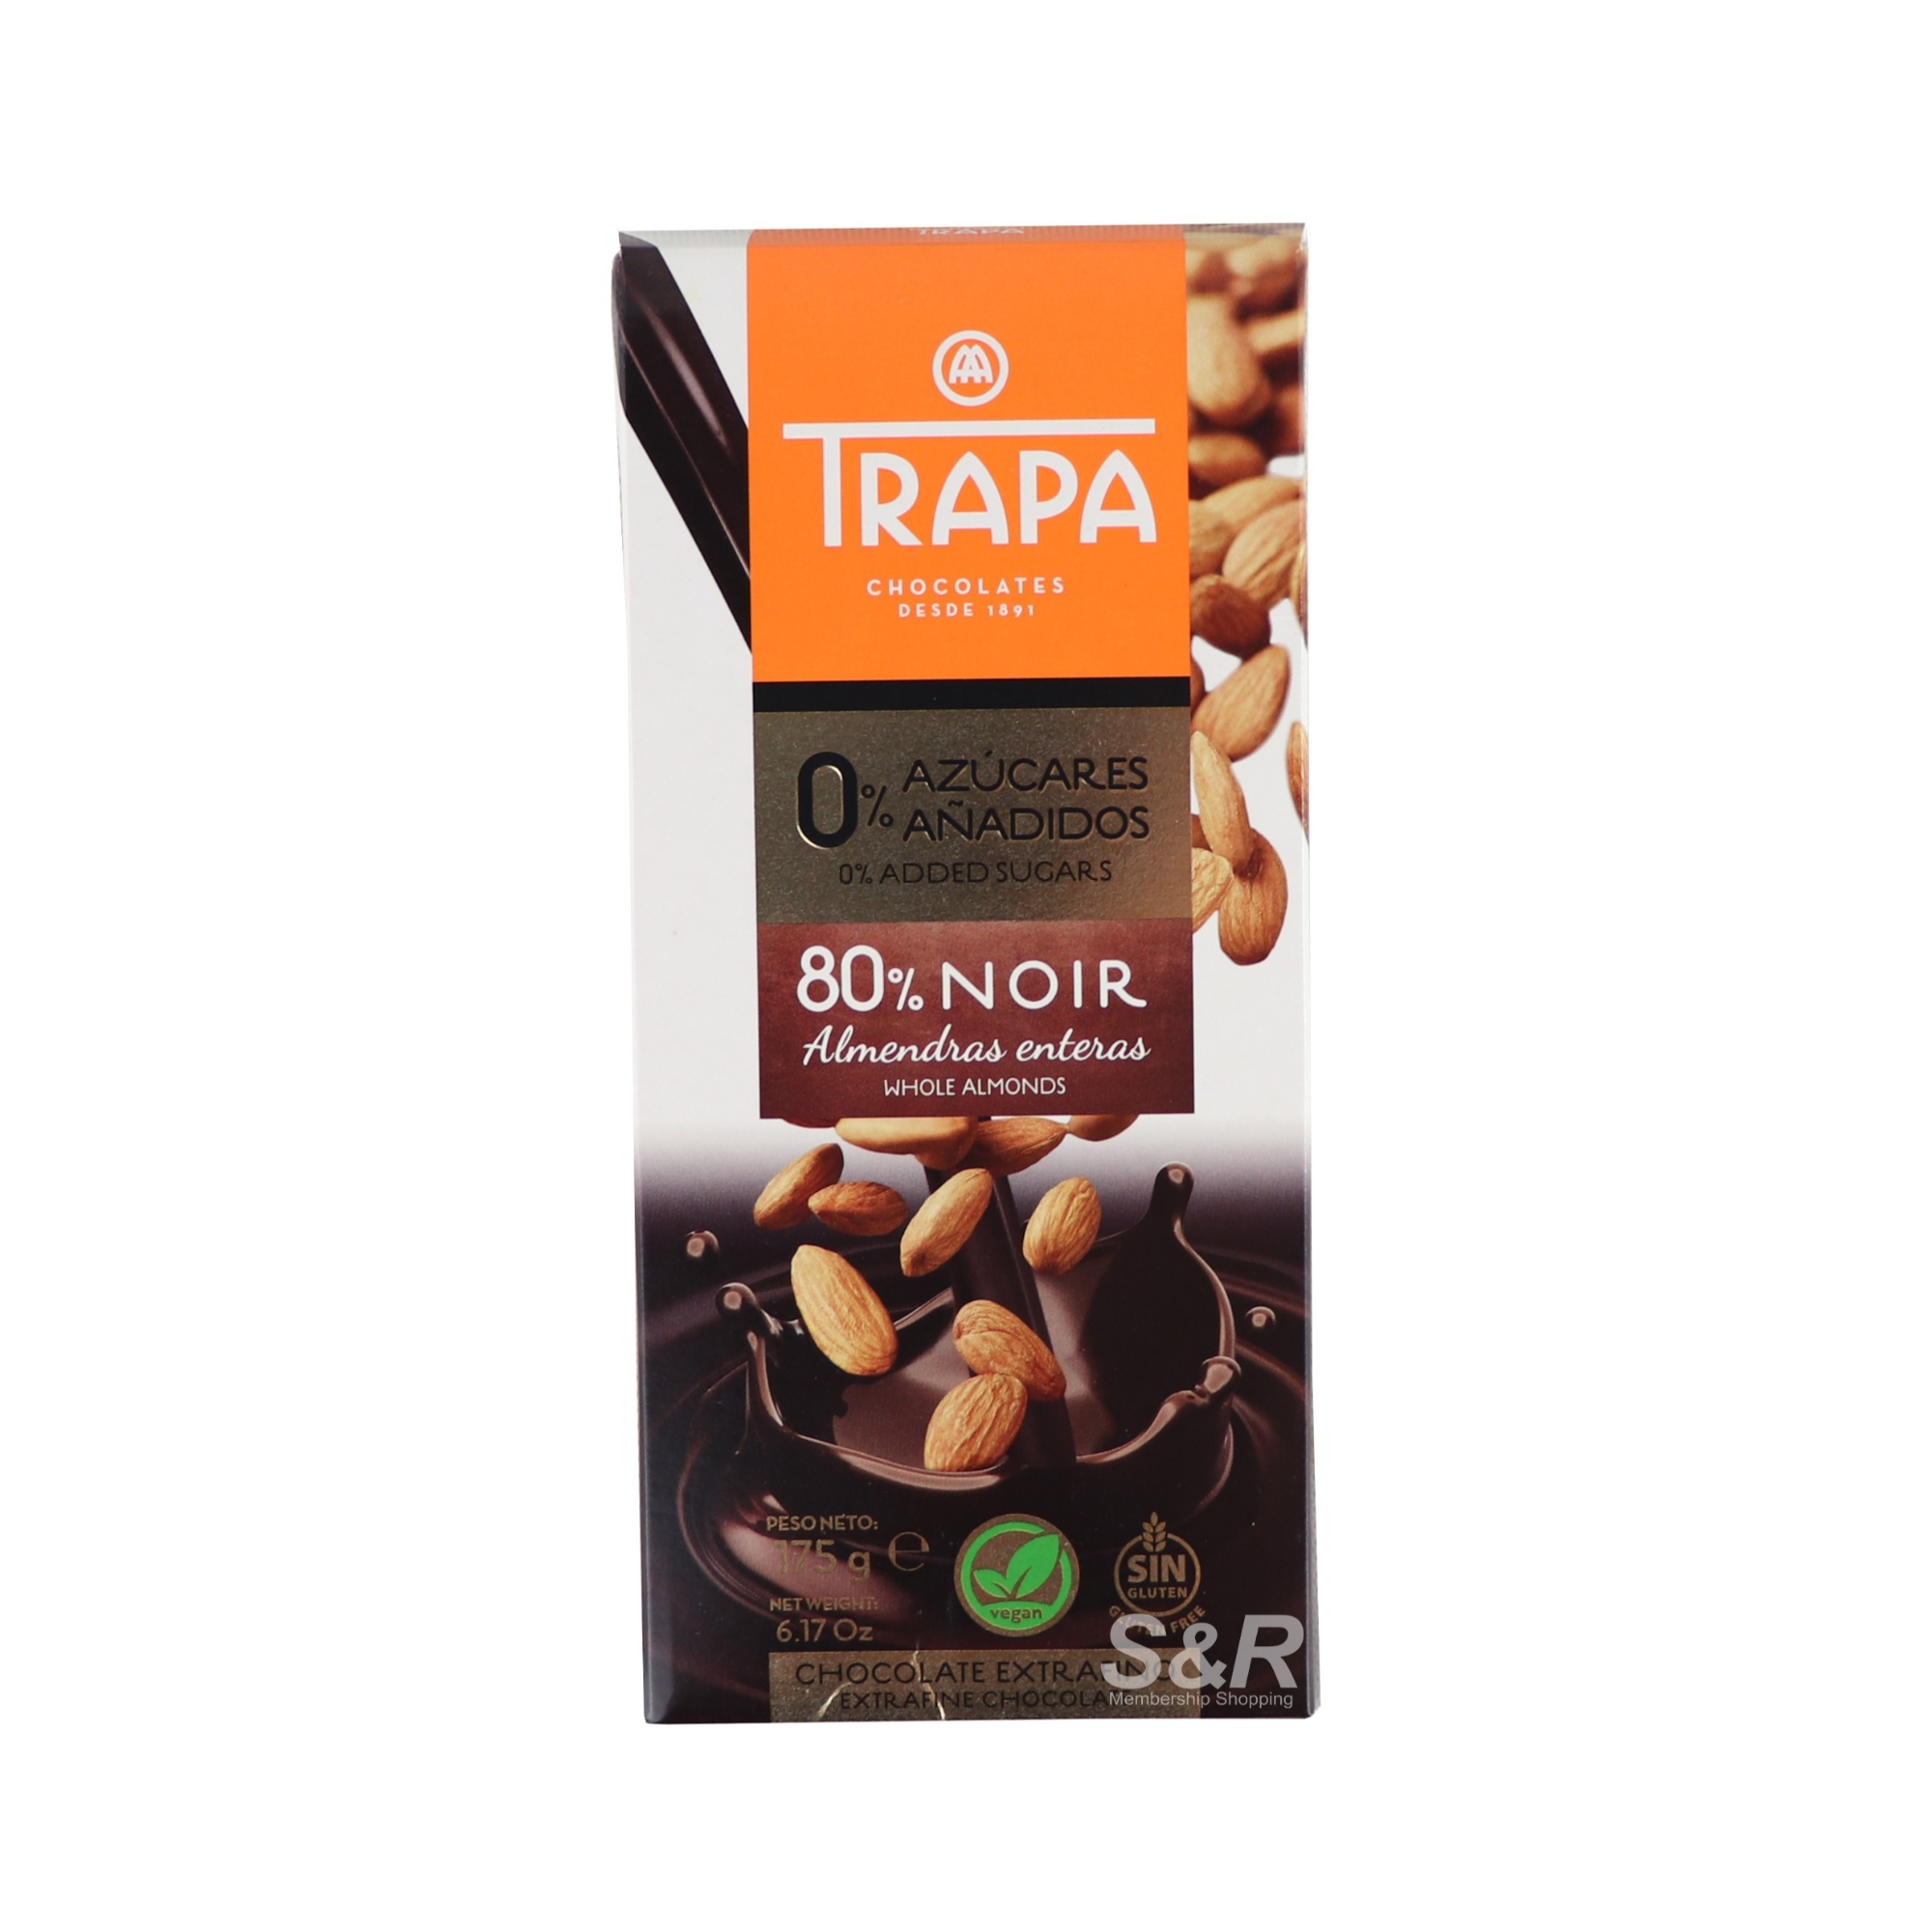 Trapa 0% Added Sugars 80% Noir Whole Almonds Dark Chocolate Bar 175g